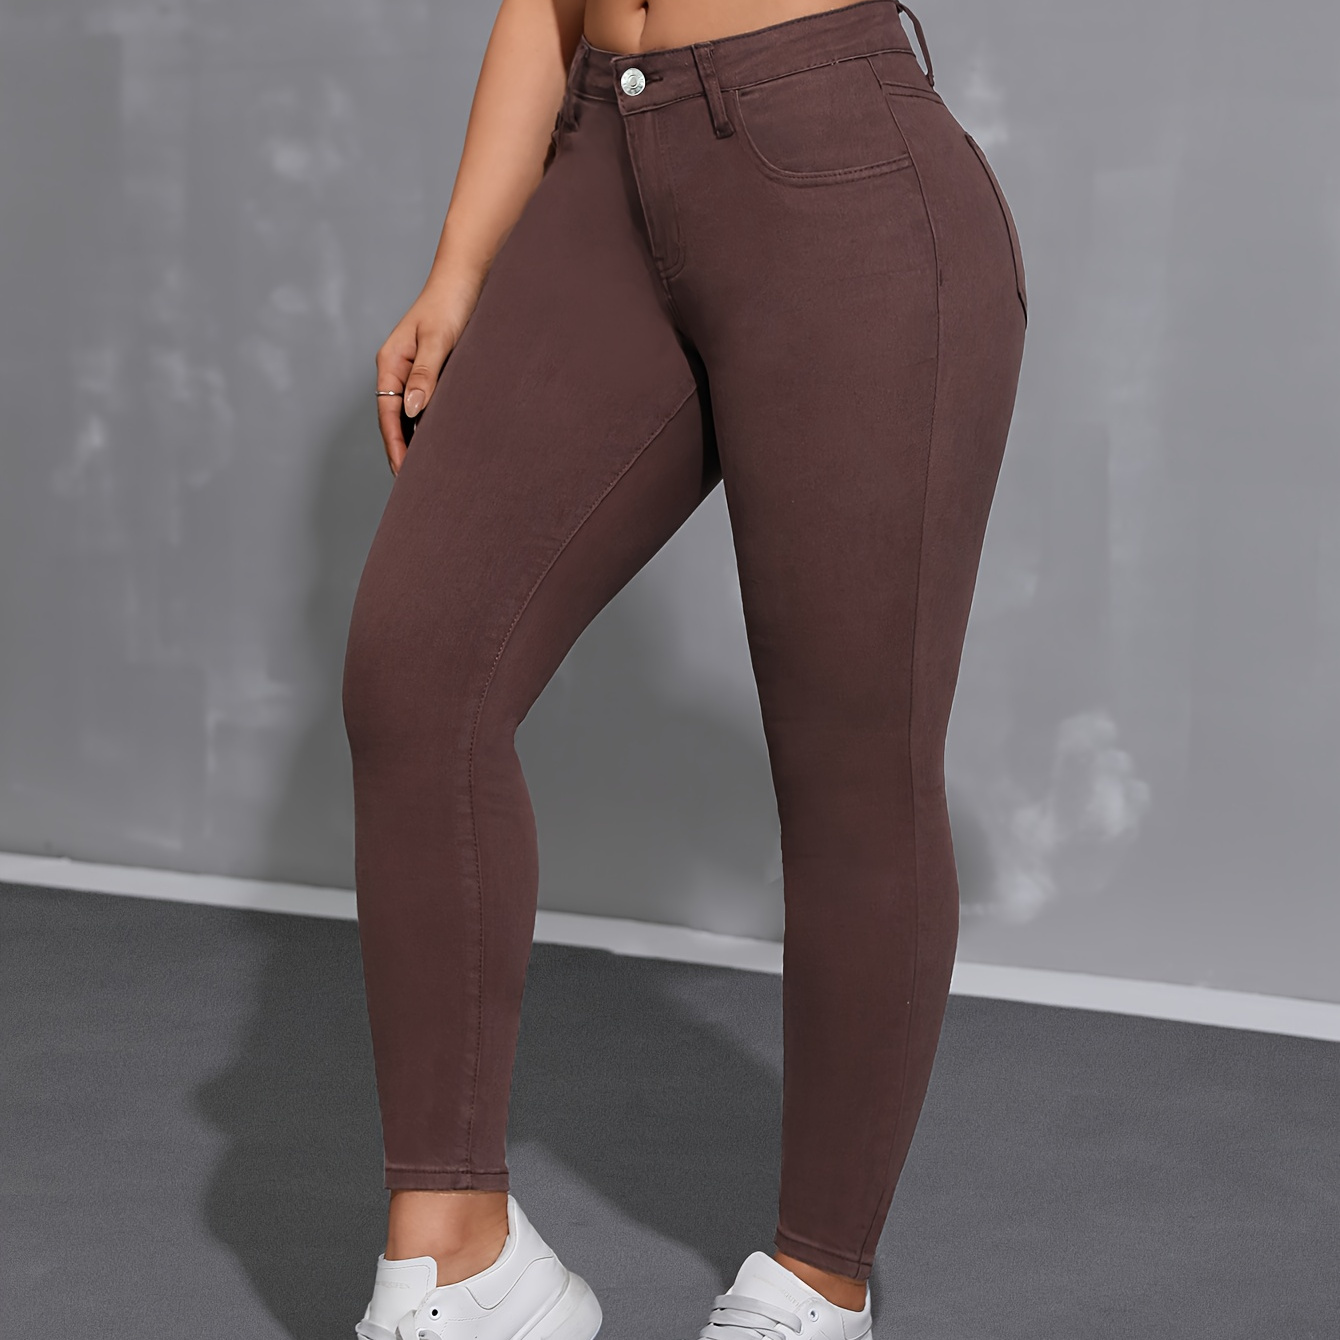 

Plain Brown Skinny Fit High Stretch Stylish Elegant Jeans Denim Pants, Women's Denim Jeans & Clothing For Autumn